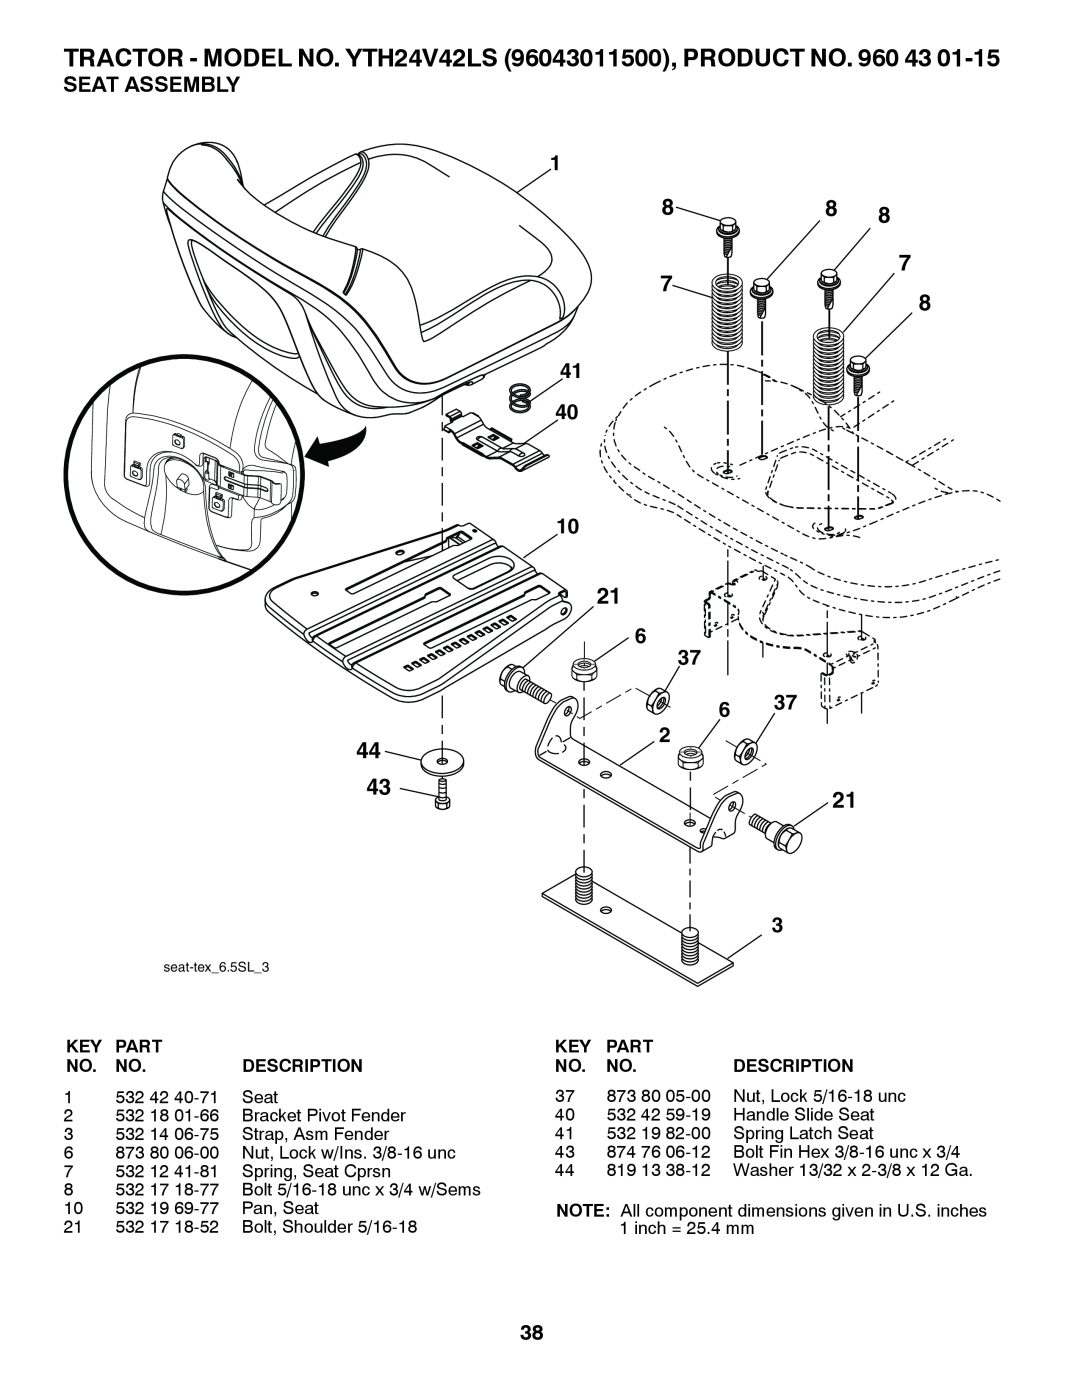 Husqvarna Seat Assembly, TRACTOR - MODEL NO. YTH24V42LS 96043011500, PRODUCT NO. 960 43, Part, Description, 532 42 